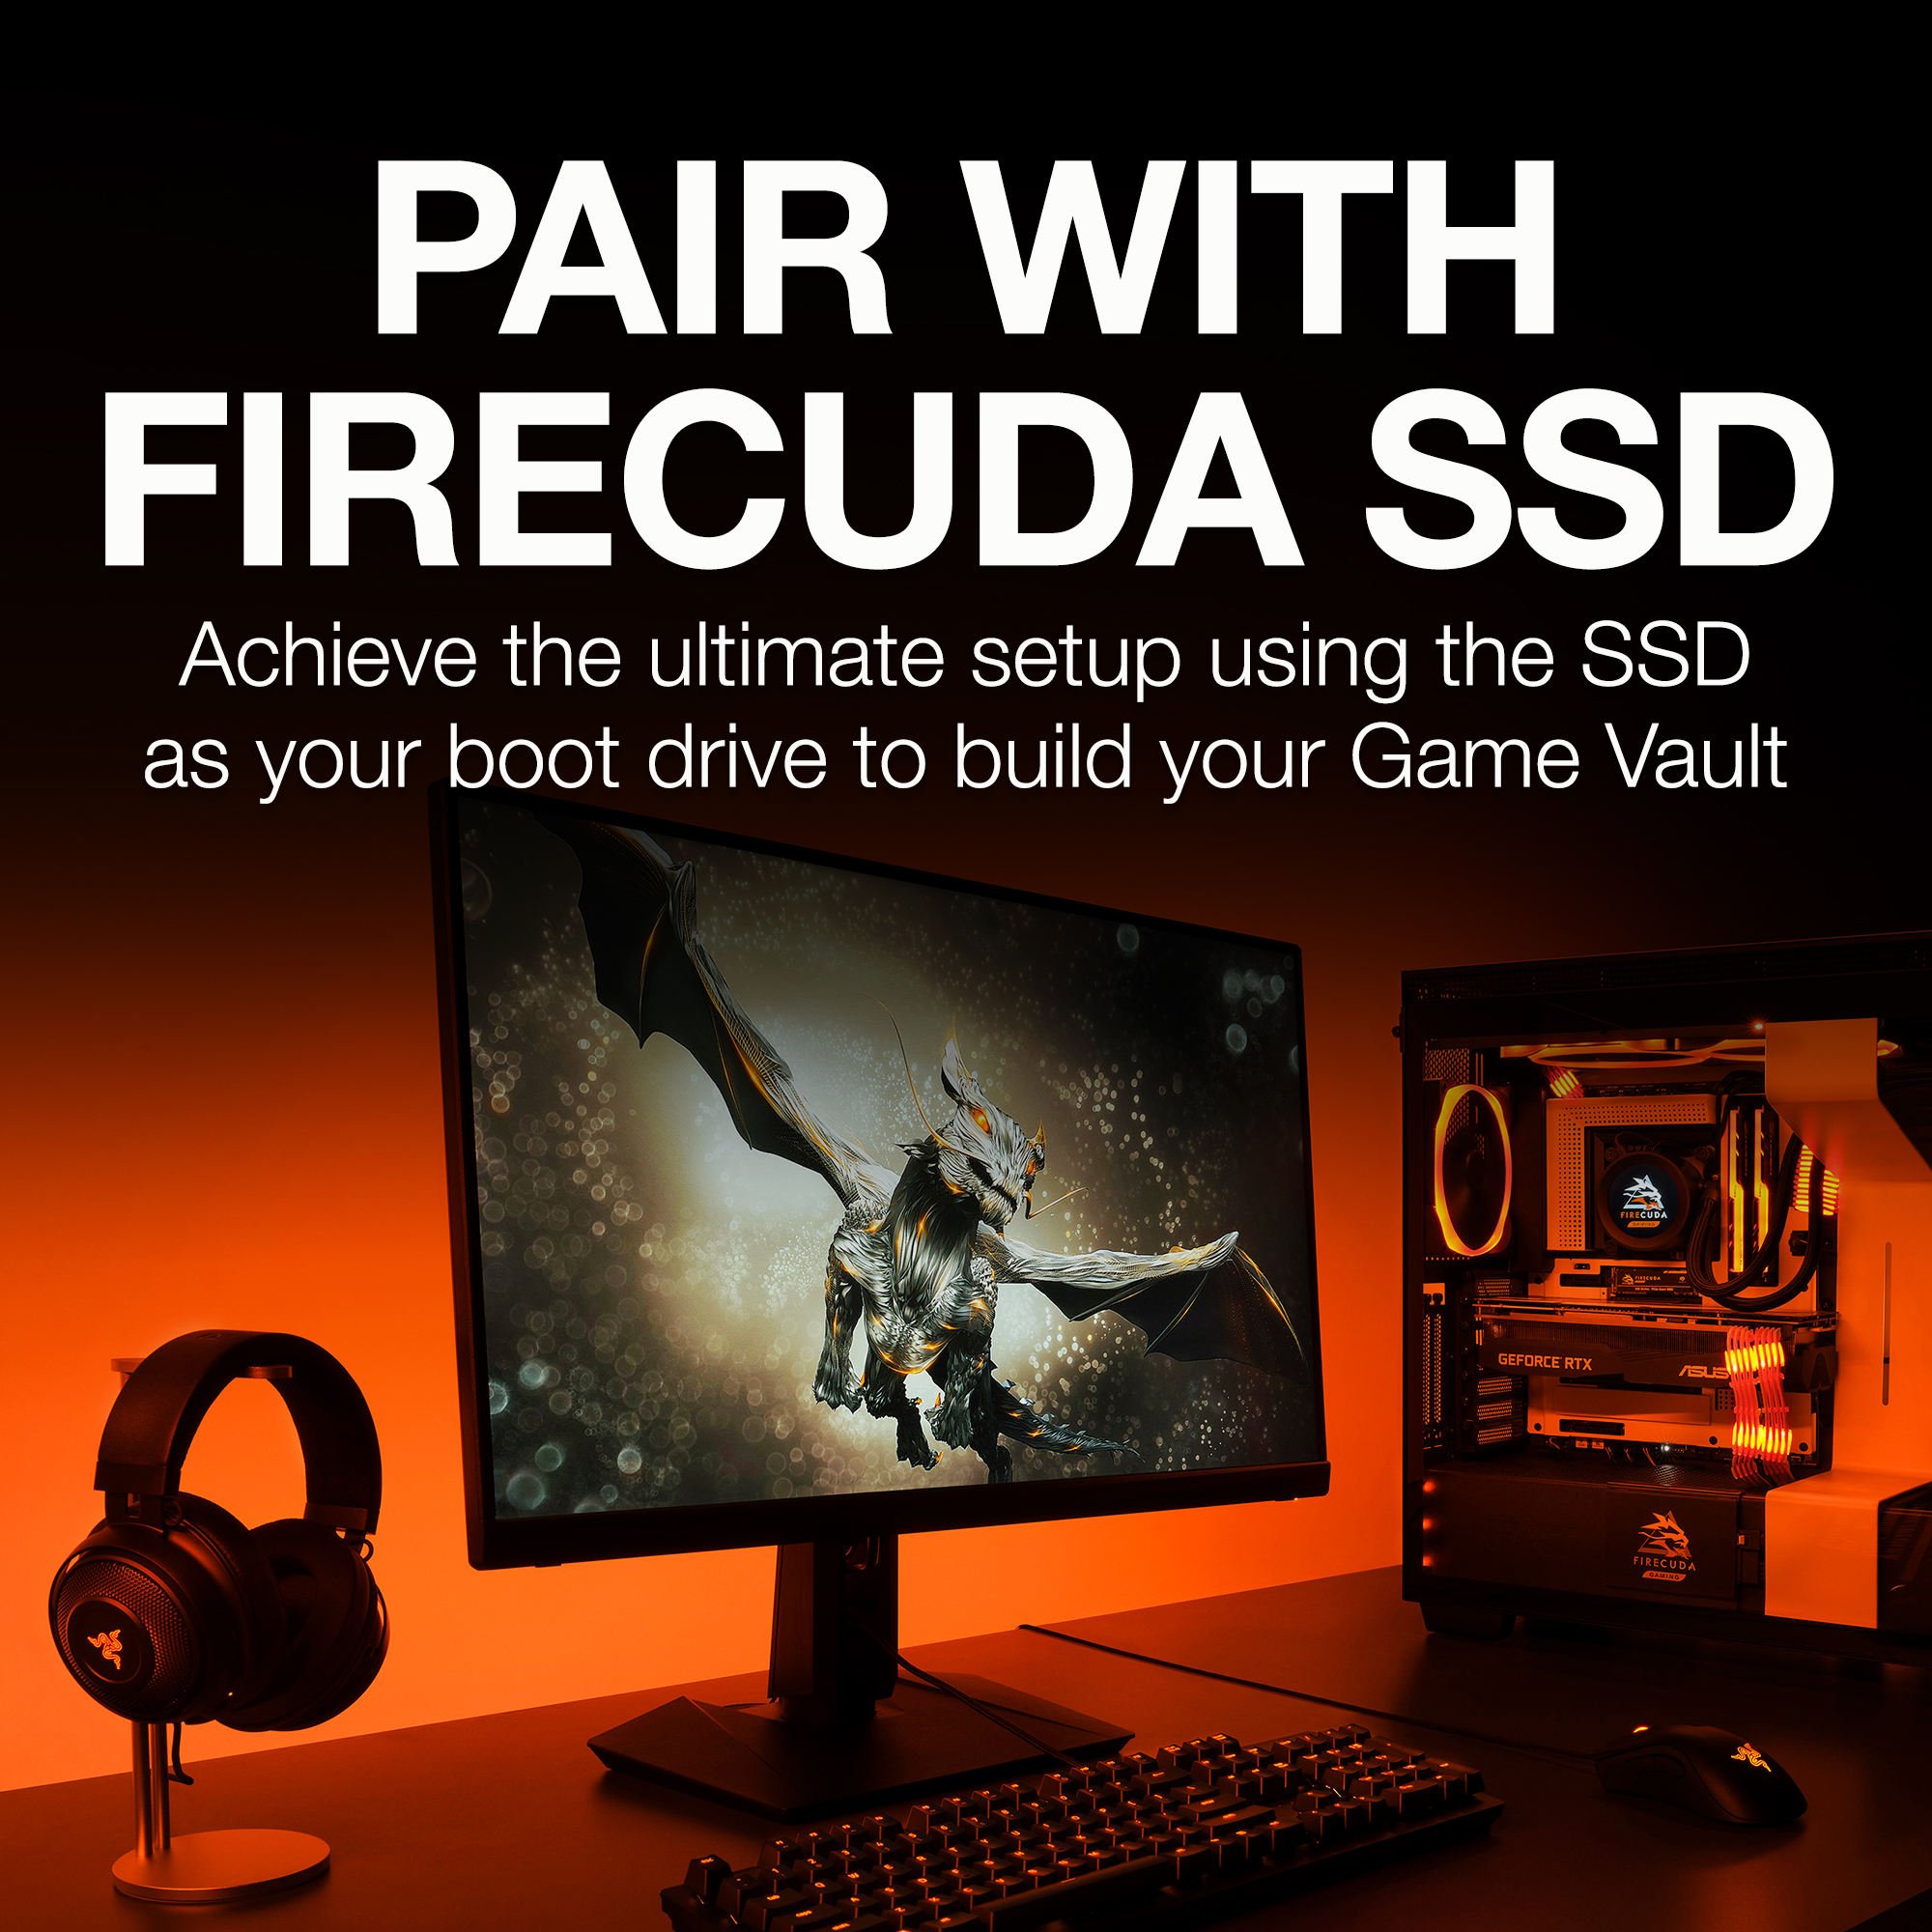 Seagate FireCuda HDD ST8000DX001 Desktop Hard Drive - Drive Solutions